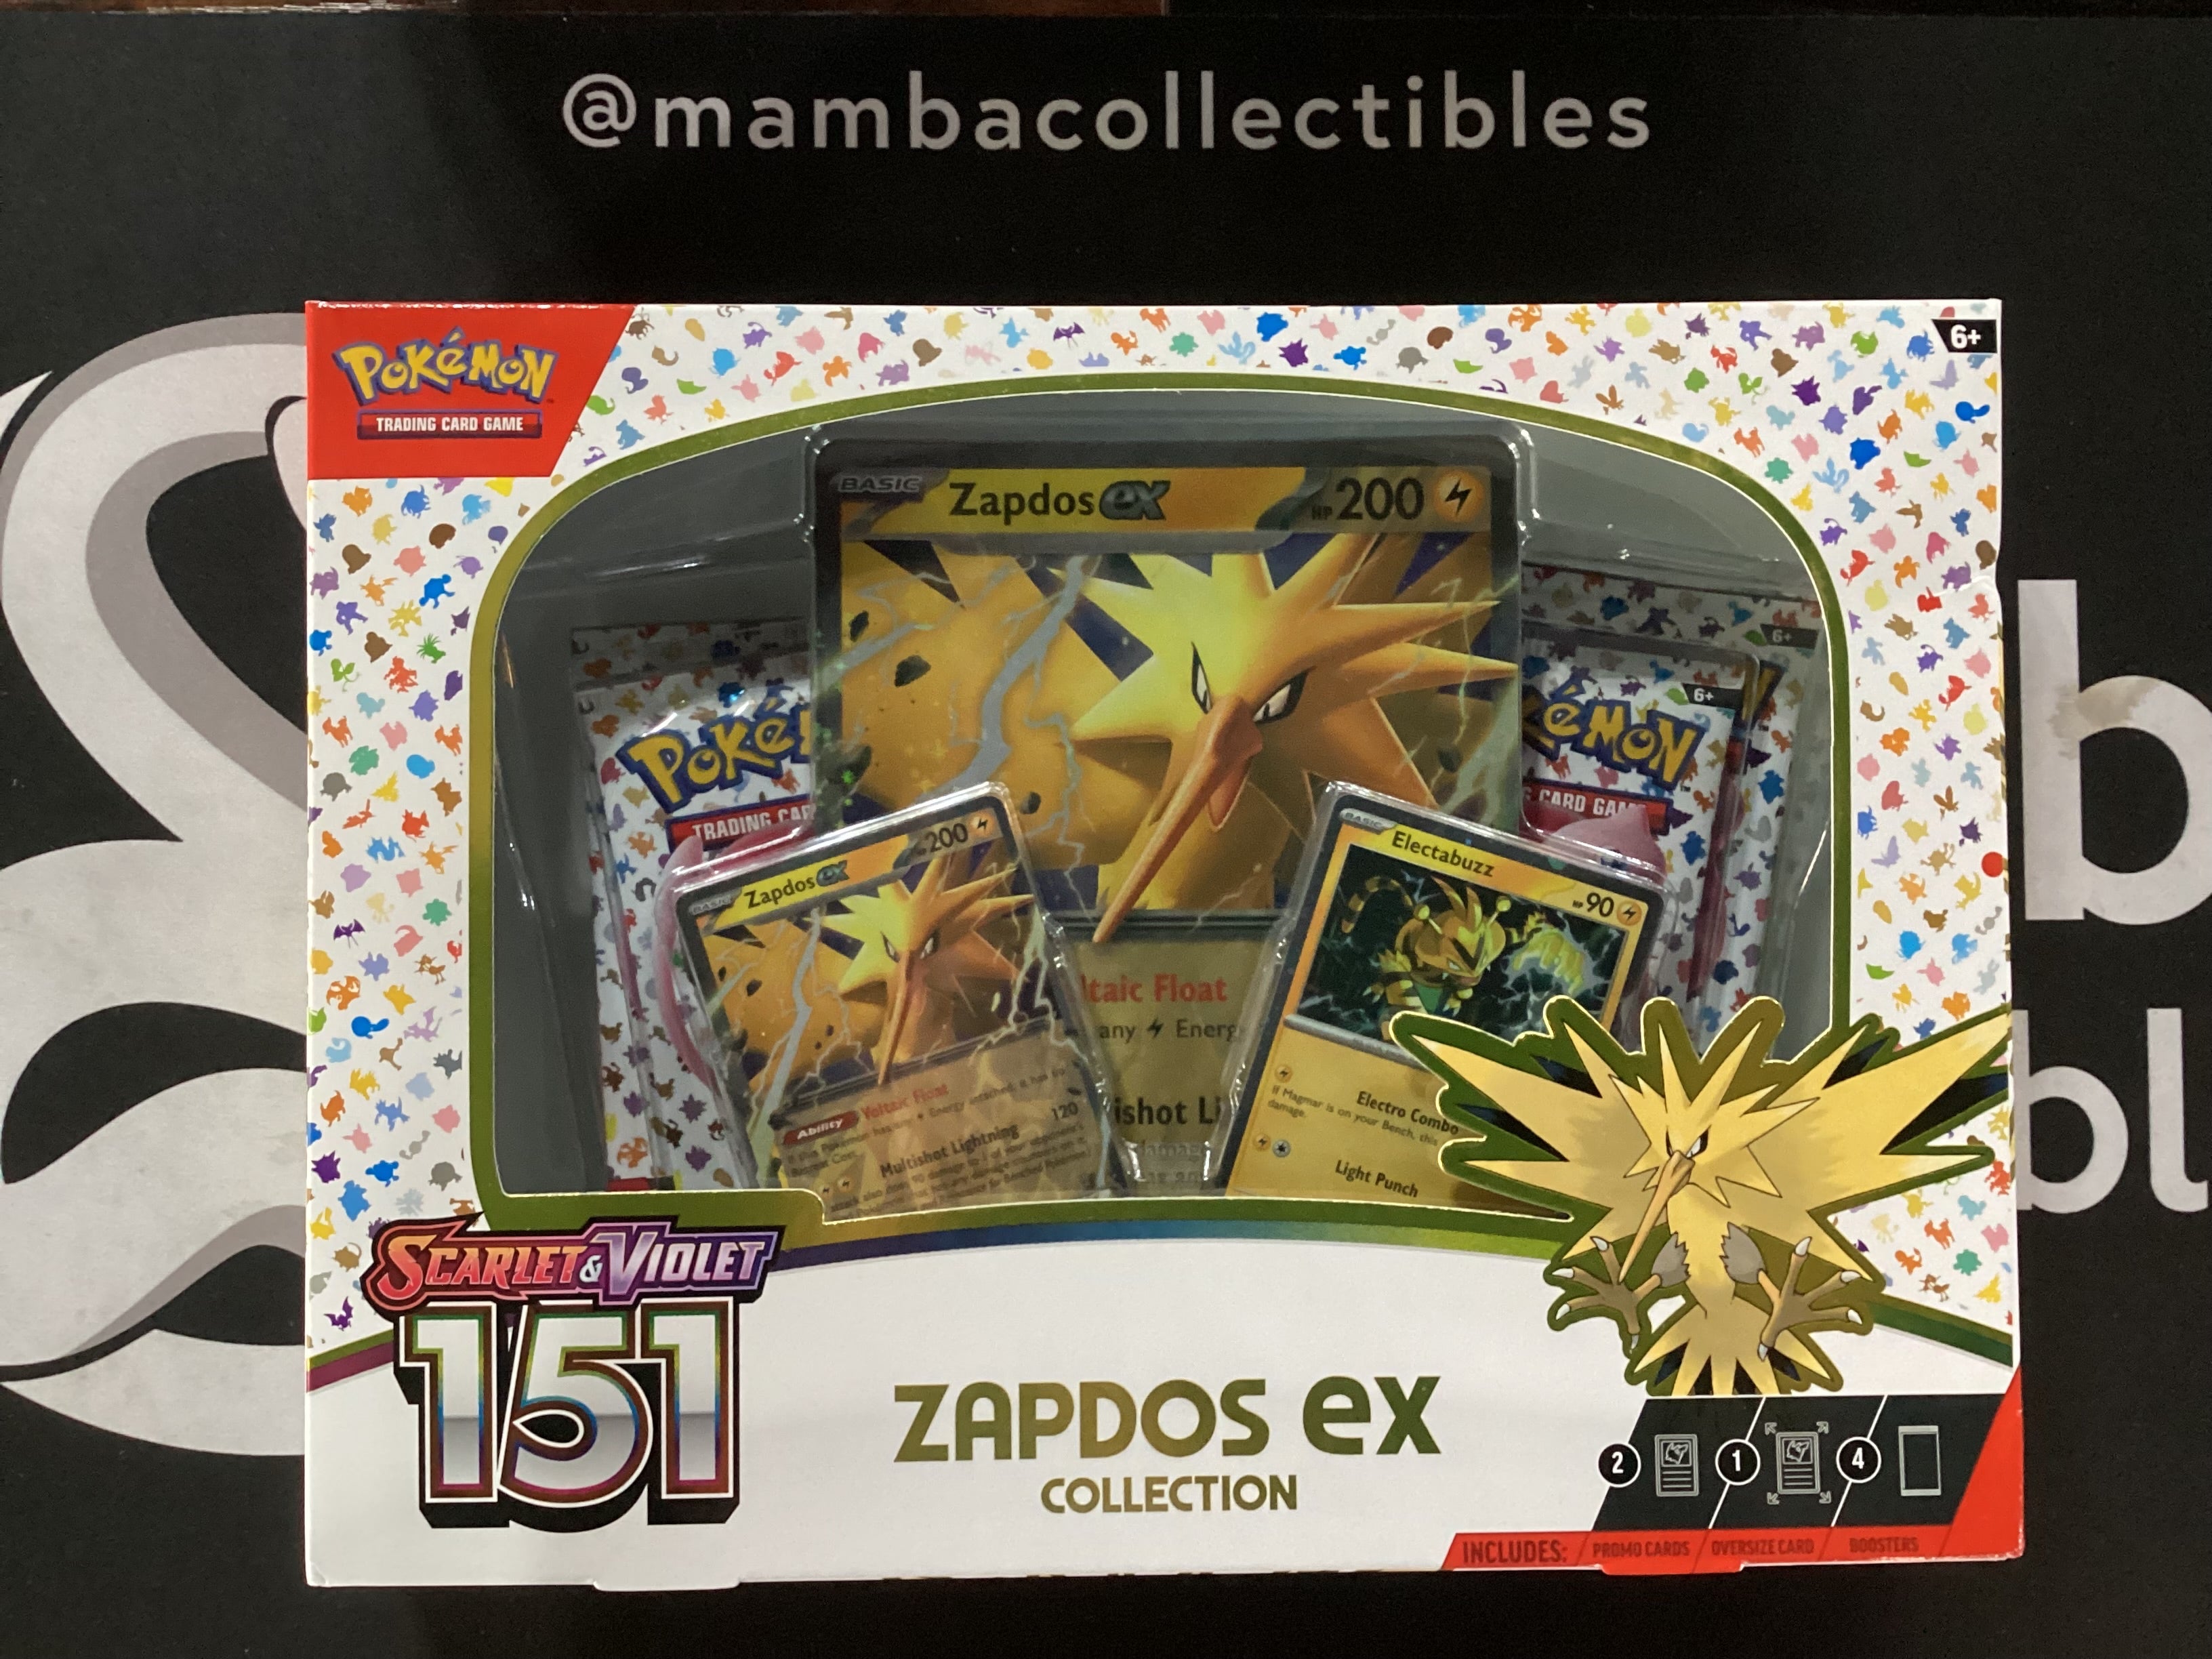 Lot de 2 boites en métal avec 229 cartes Pokémon - Pokémon TM - Label Emmaüs